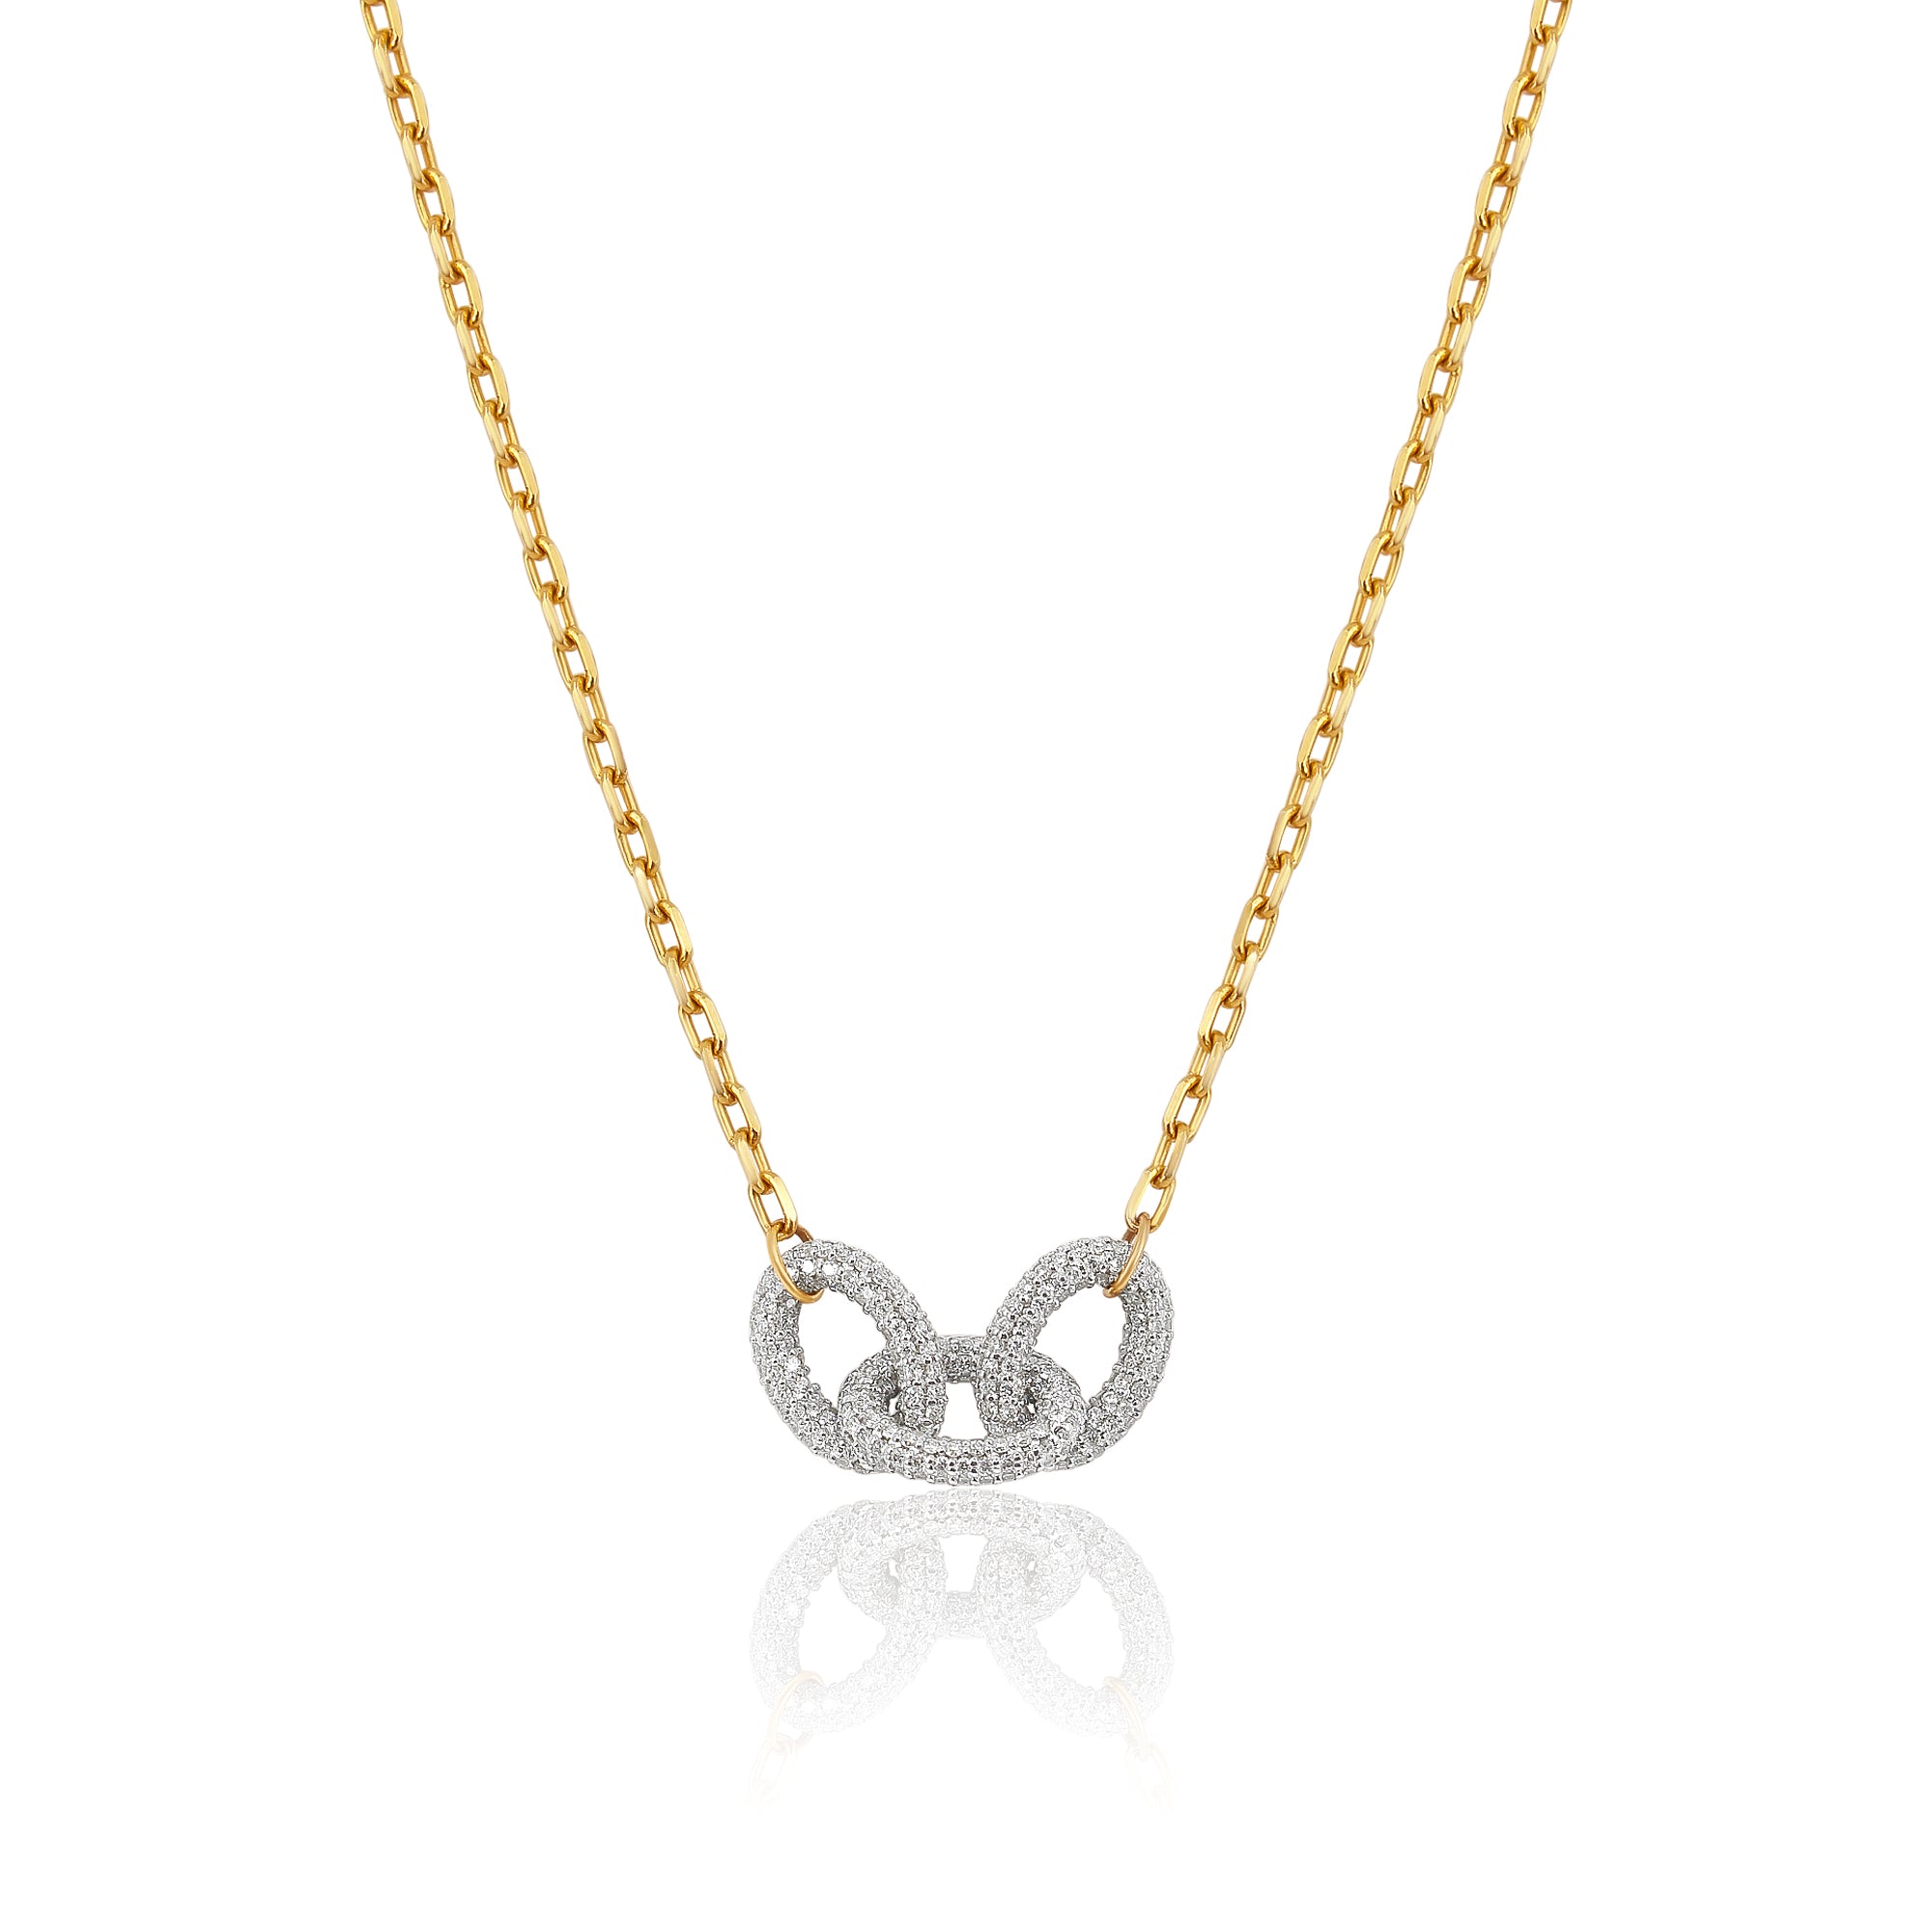 Gold Diamond Double Clasp Link Chain Necklace - Monisha Melwani Jewelry